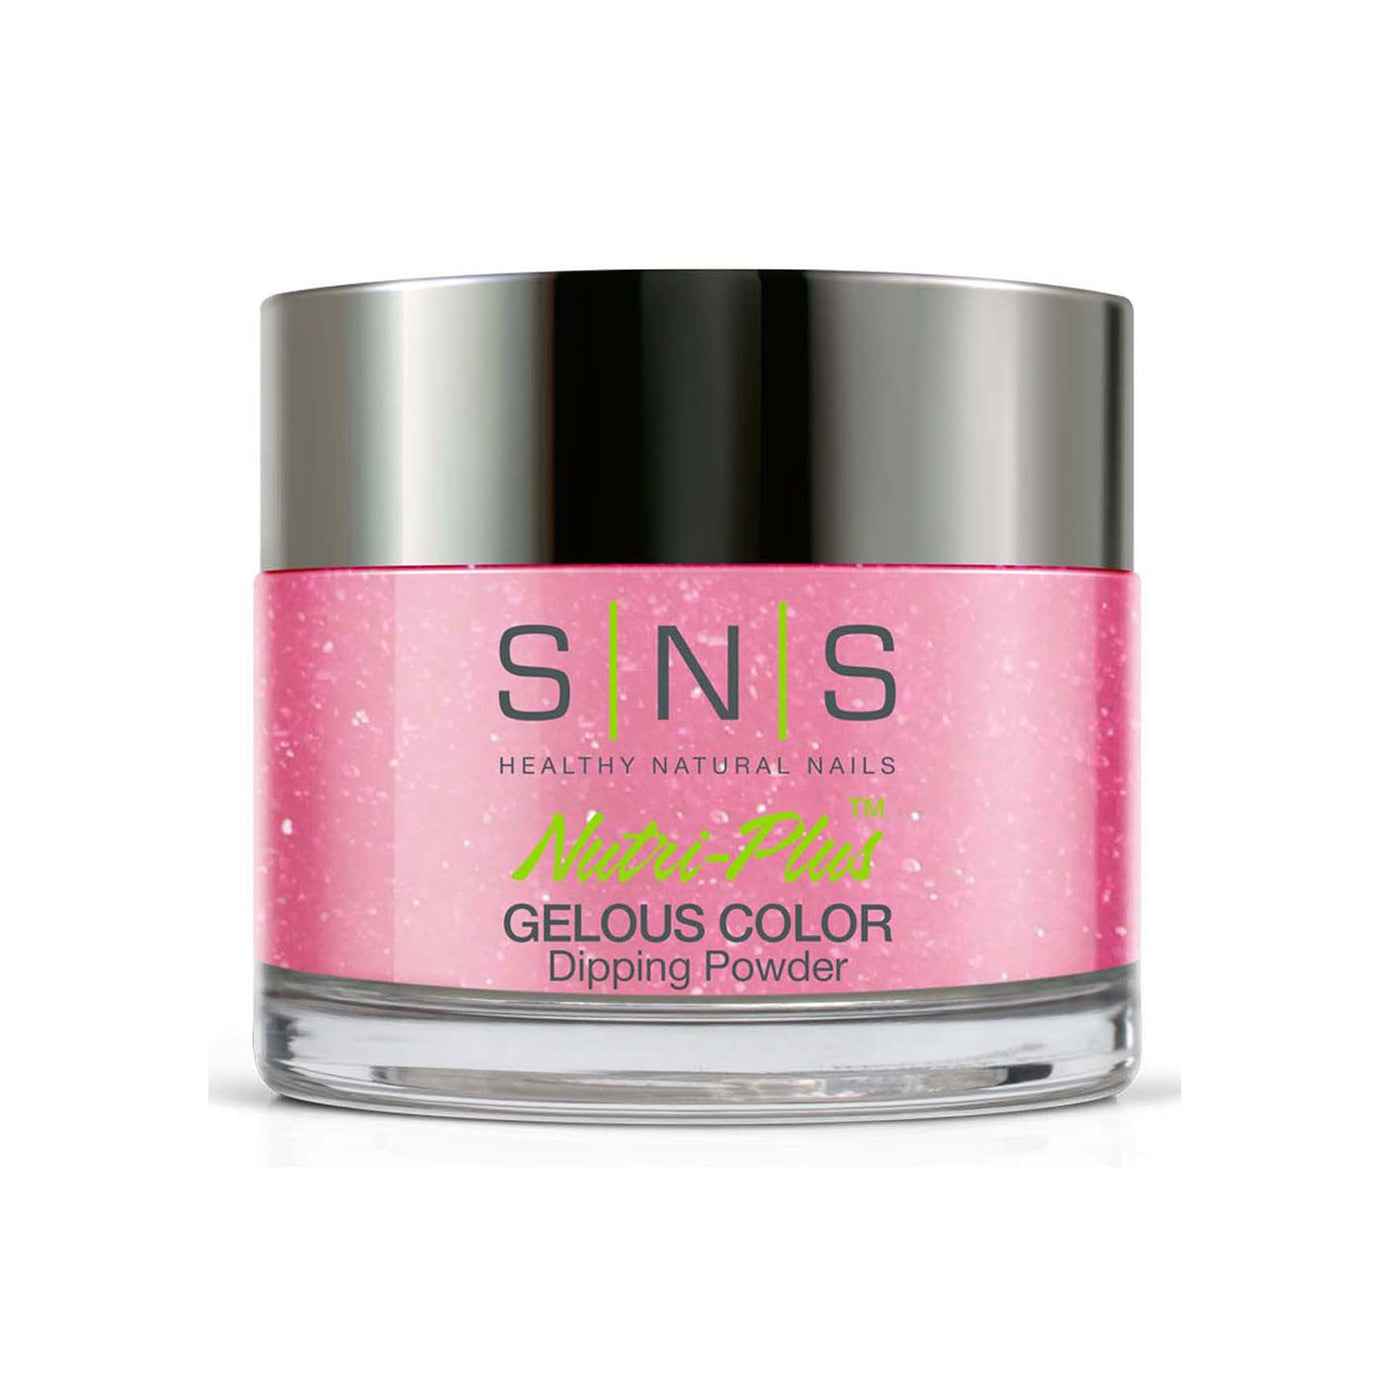 SNS Gelous Color Dipping Powder BD05 Pink Platforms (43g) packaging